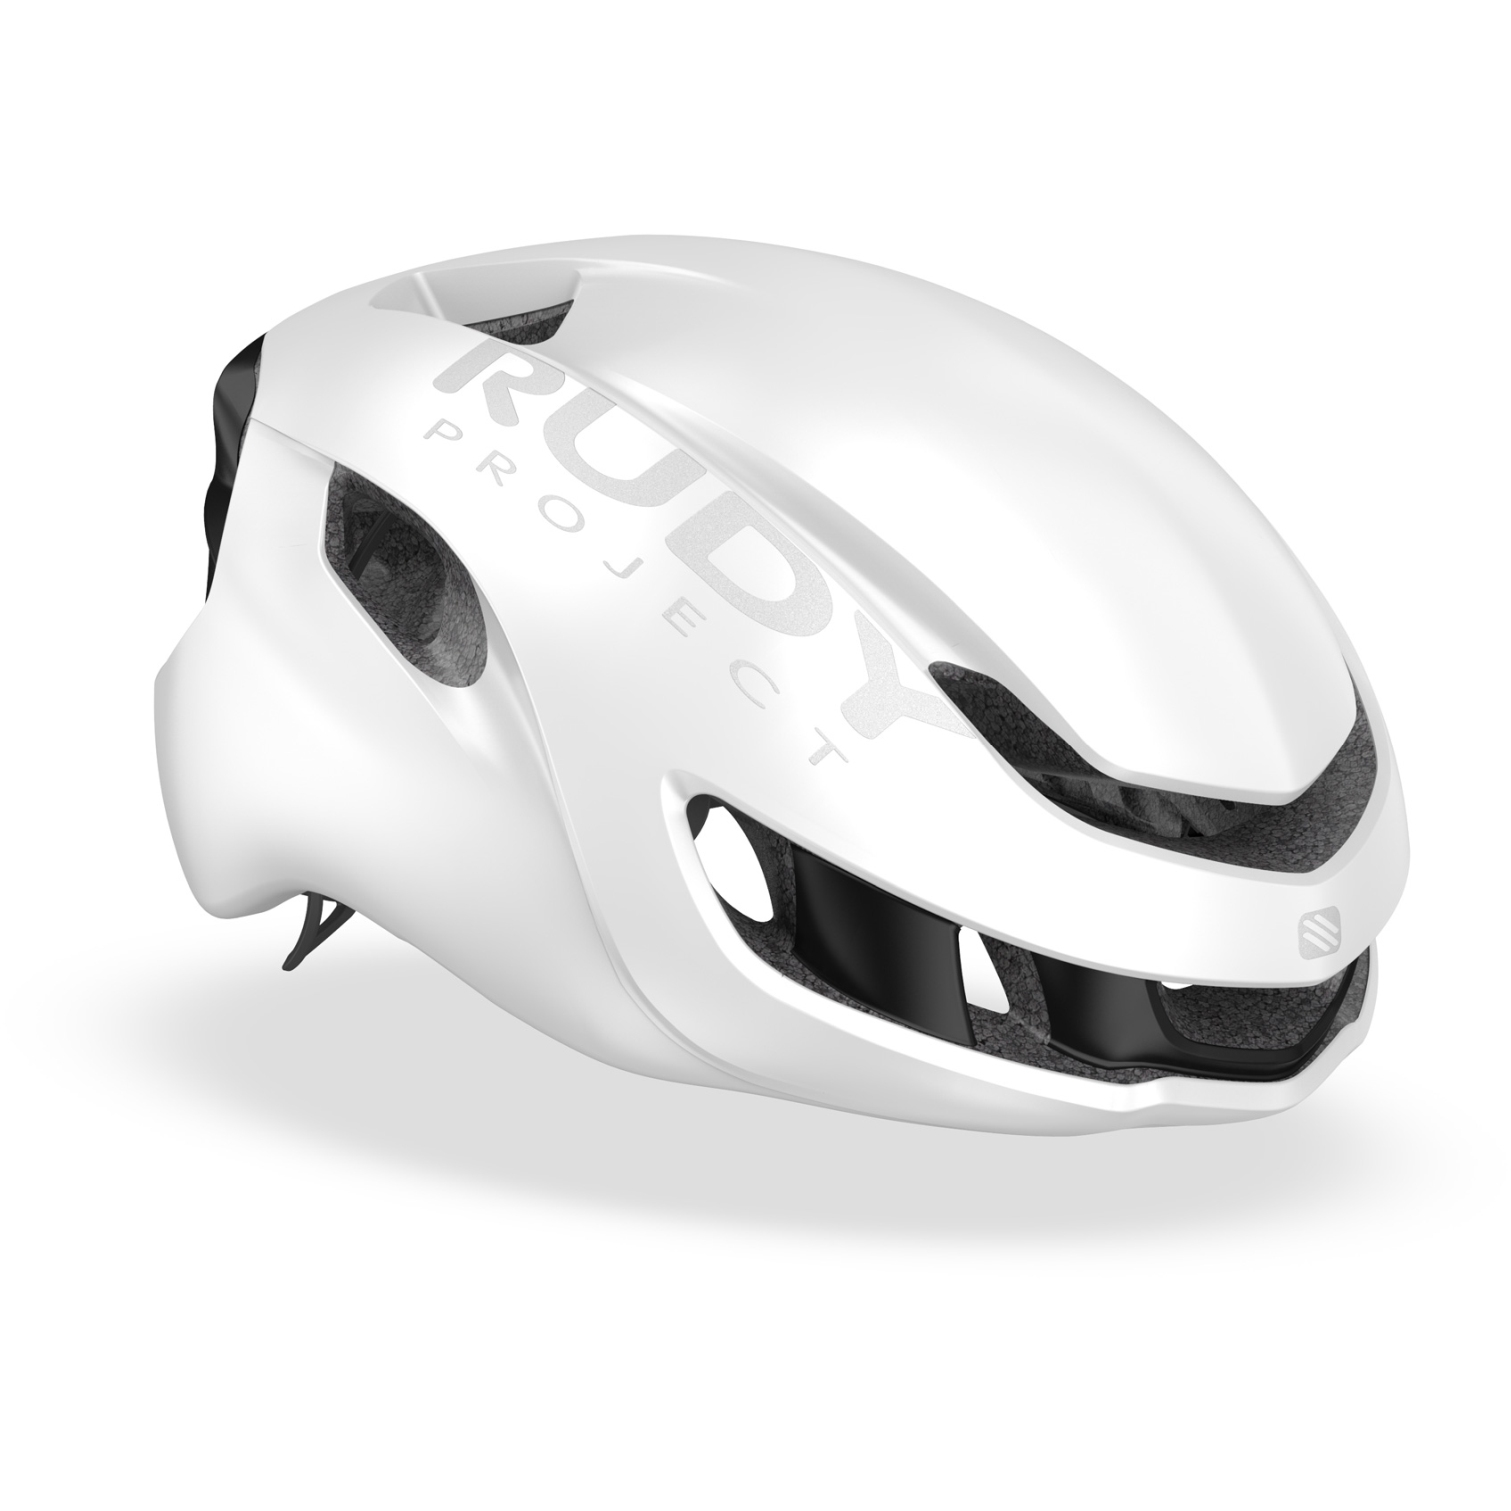 Productfoto van Rudy Project Nytron Helmet - White (Matte)